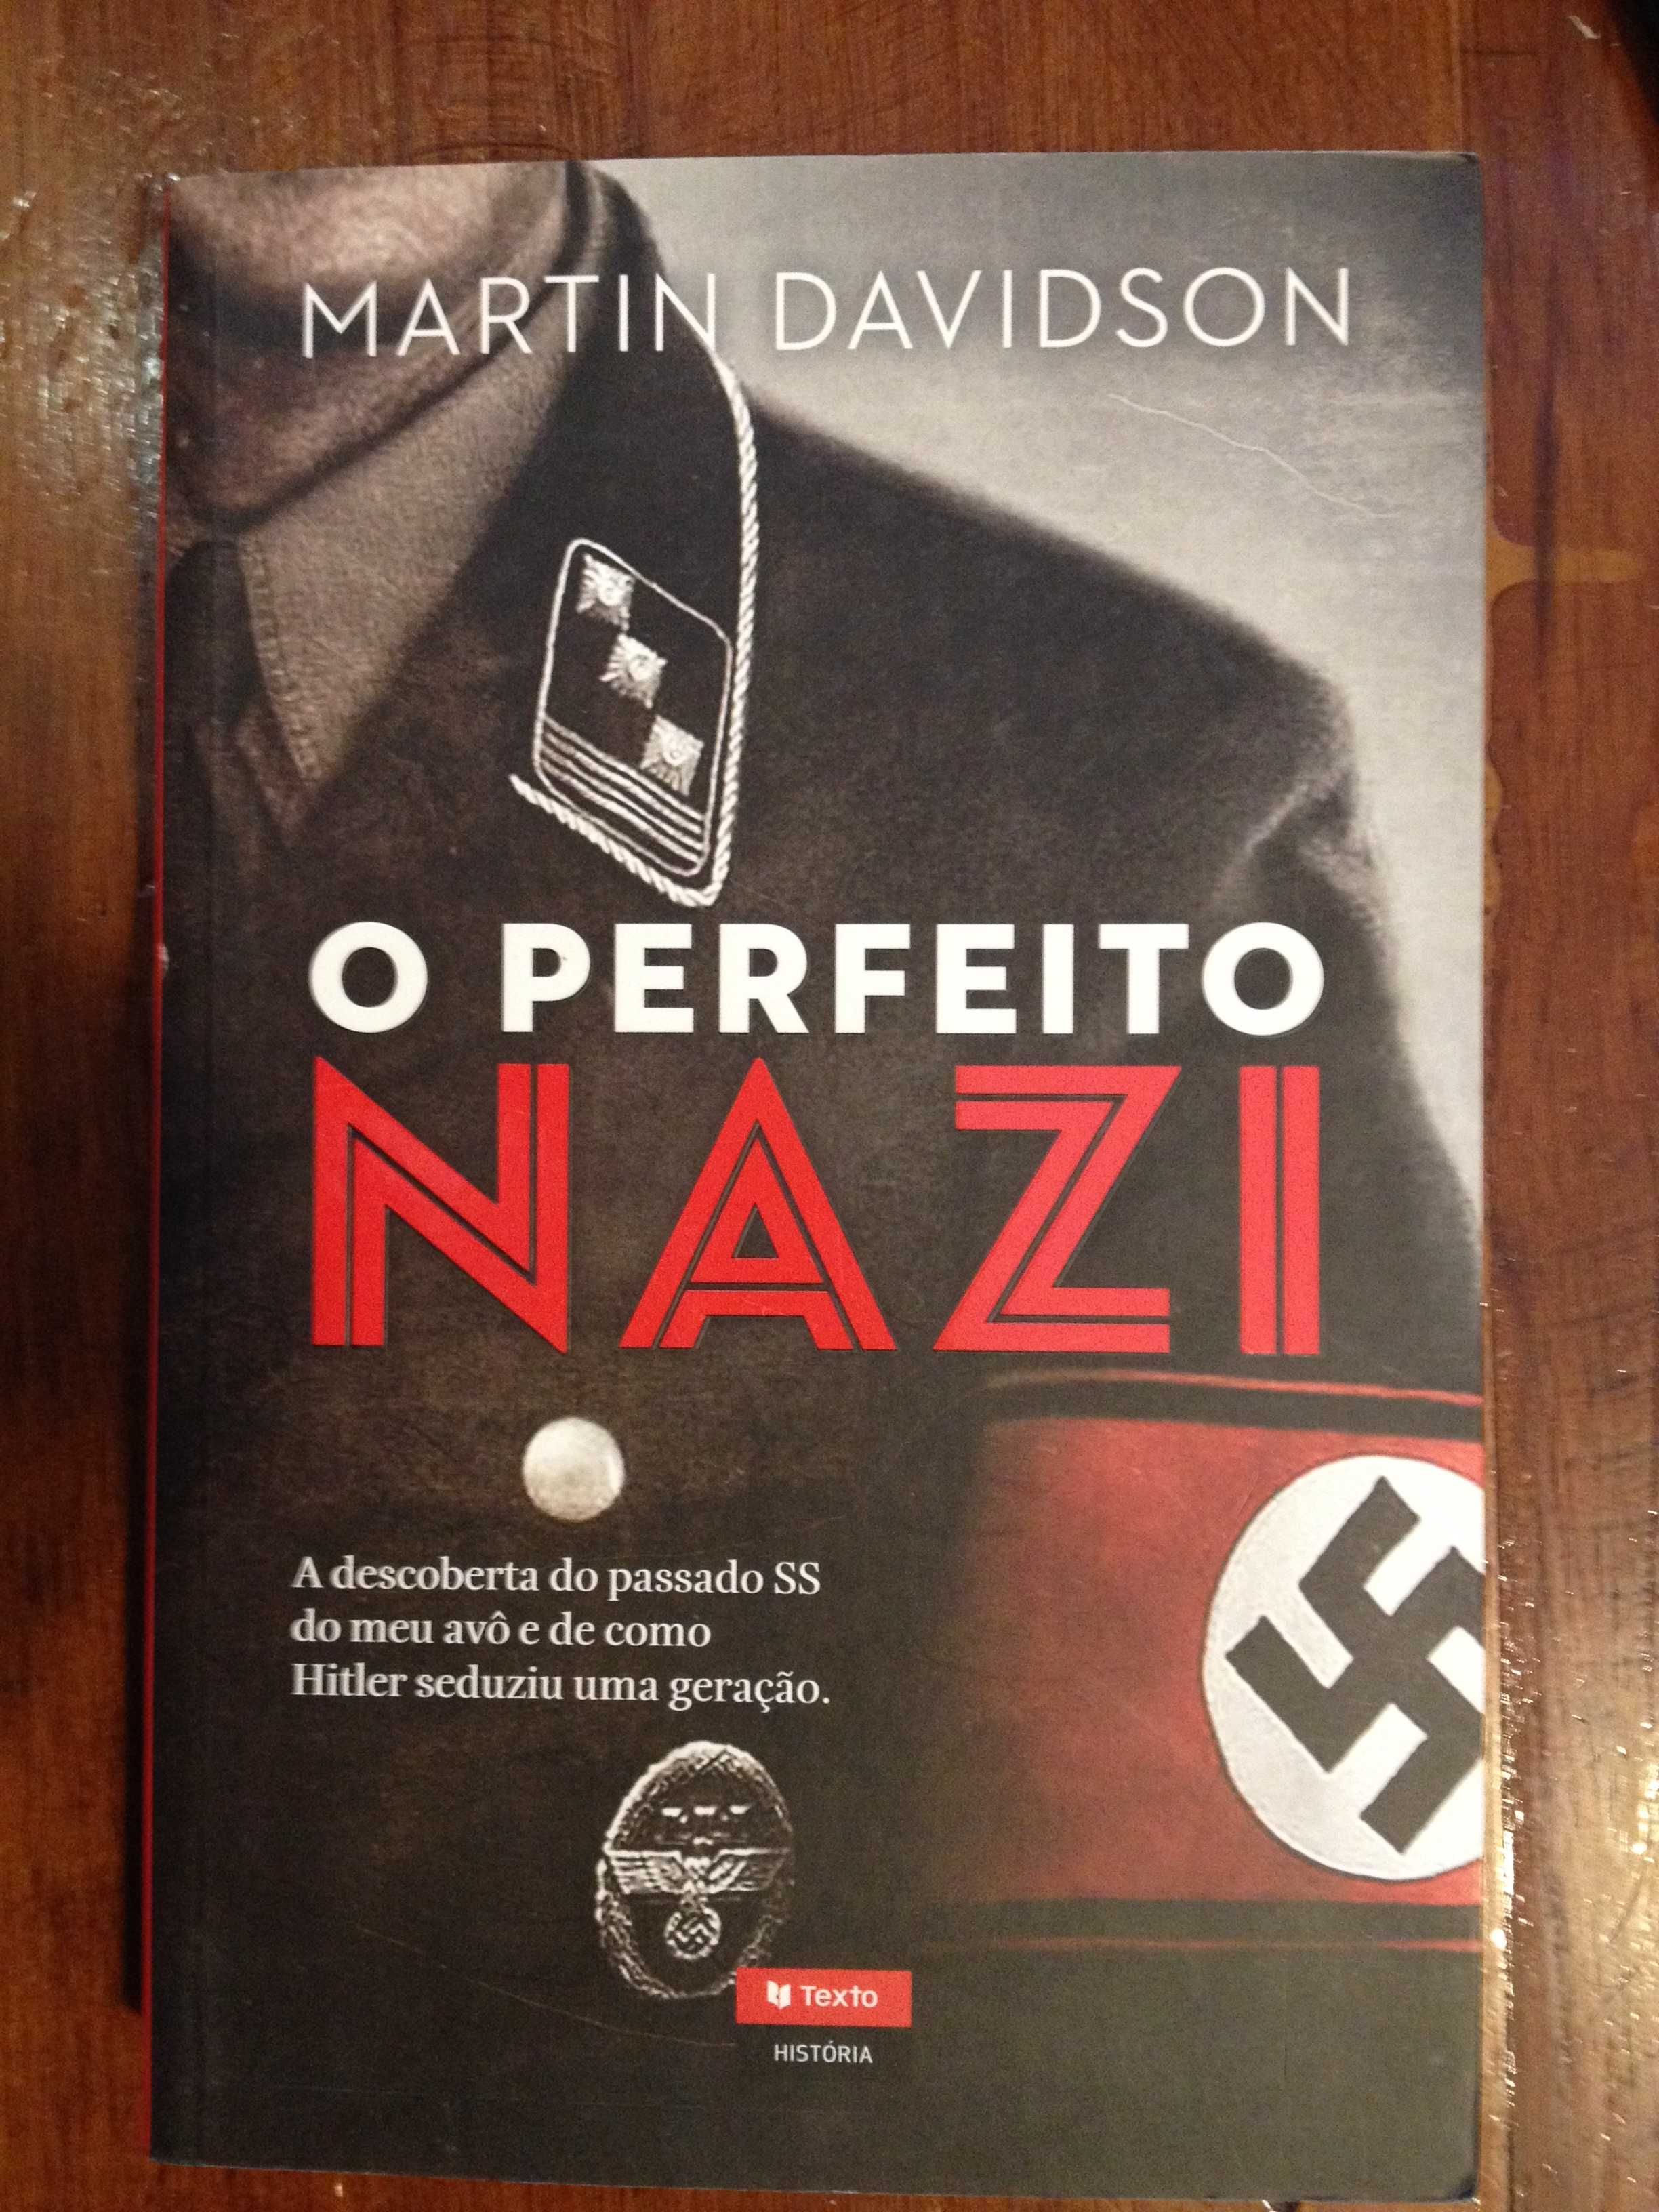 Martin Davidson - O perfeito Nazi